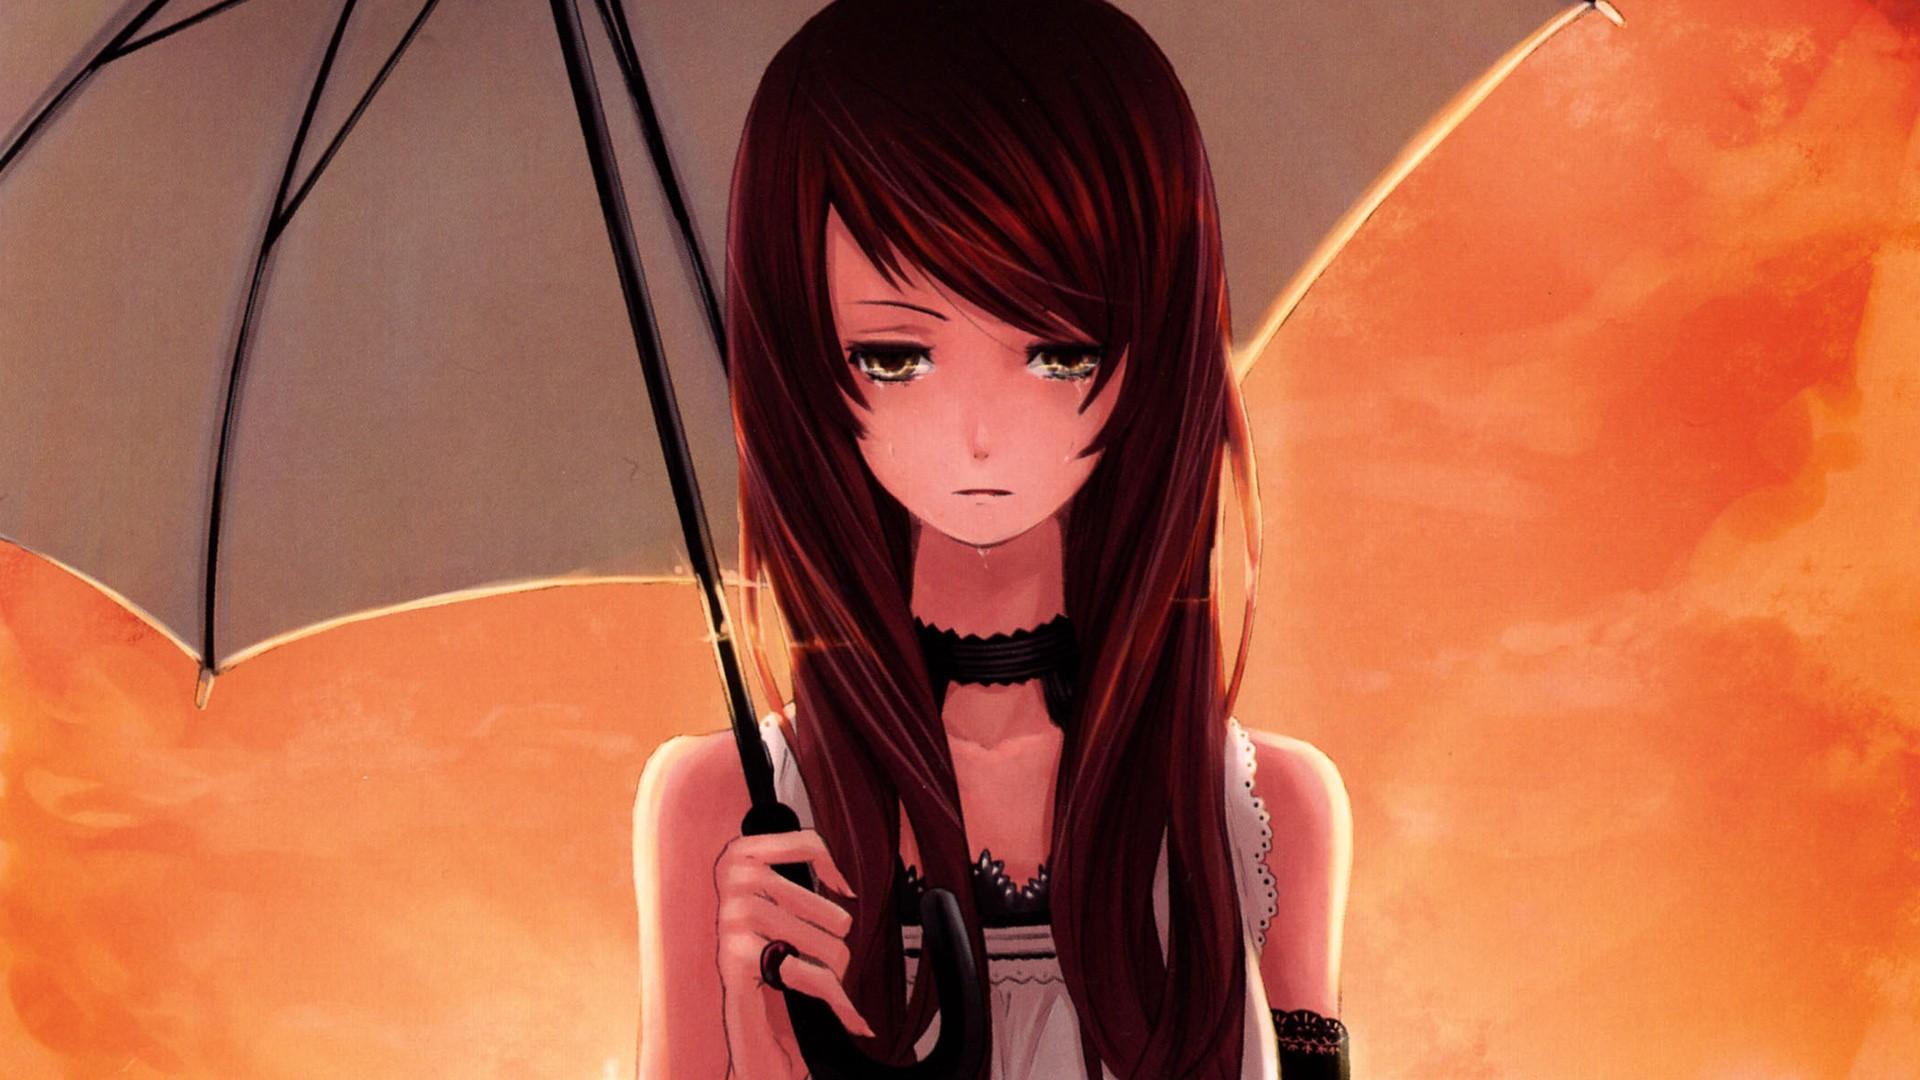 Sad Anime Girl, HD Anime, 4k Wallpaper, Image, Background